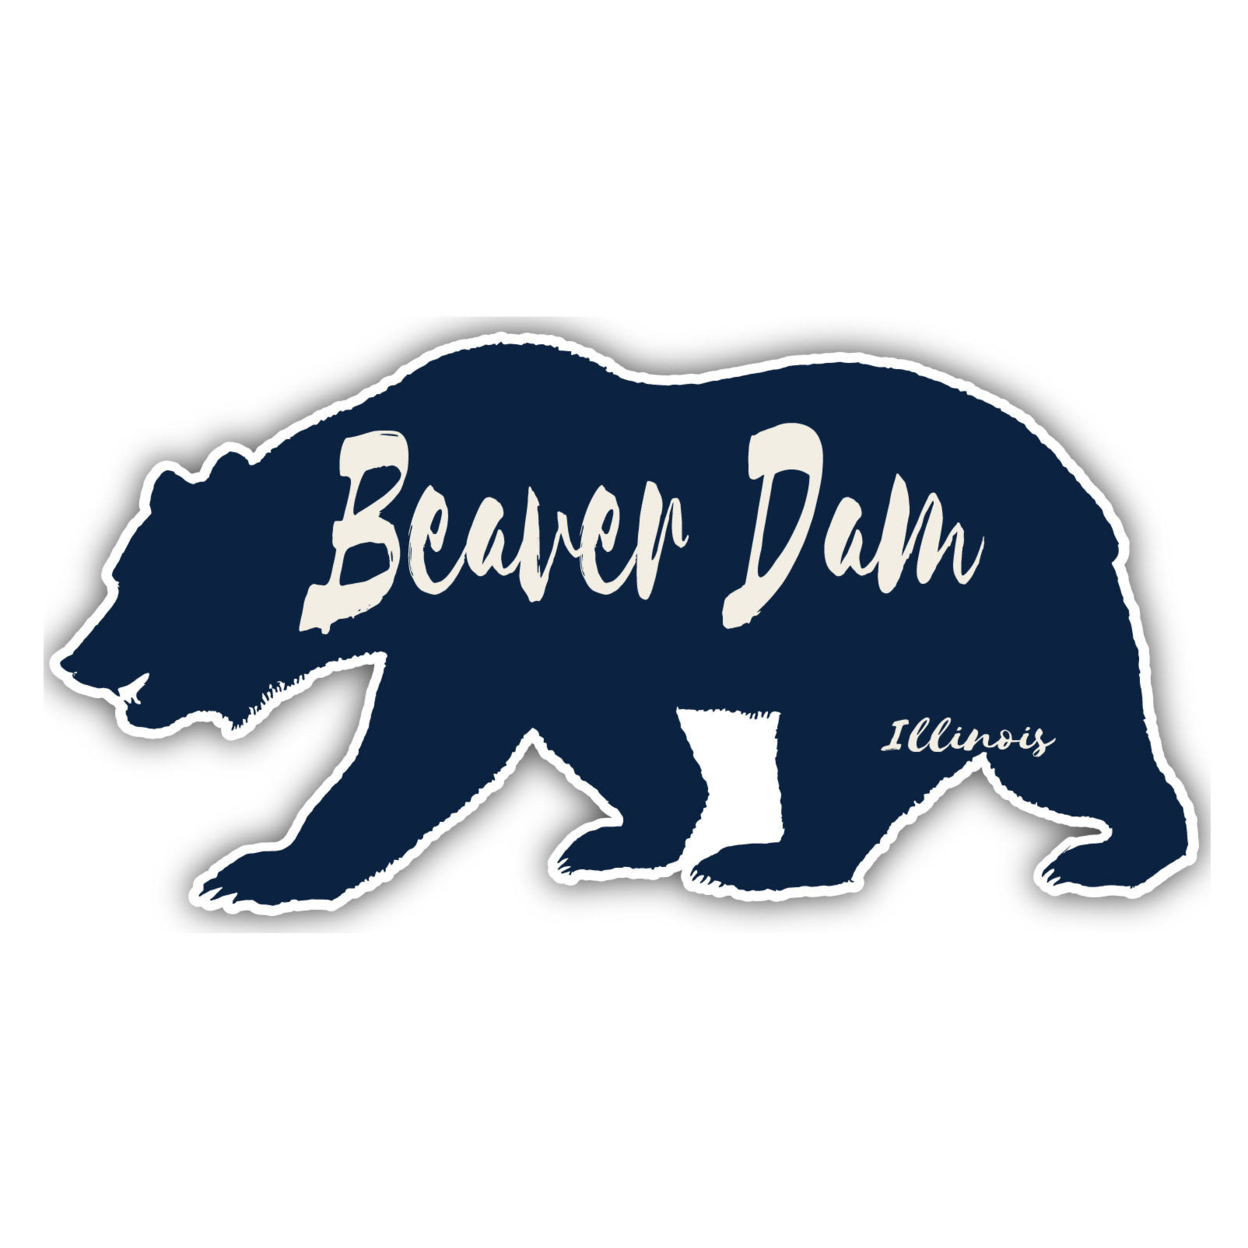 Beaver Dam Illinois Souvenir Decorative Stickers (Choose Theme And Size) - 4-Pack, 2-Inch, Bear